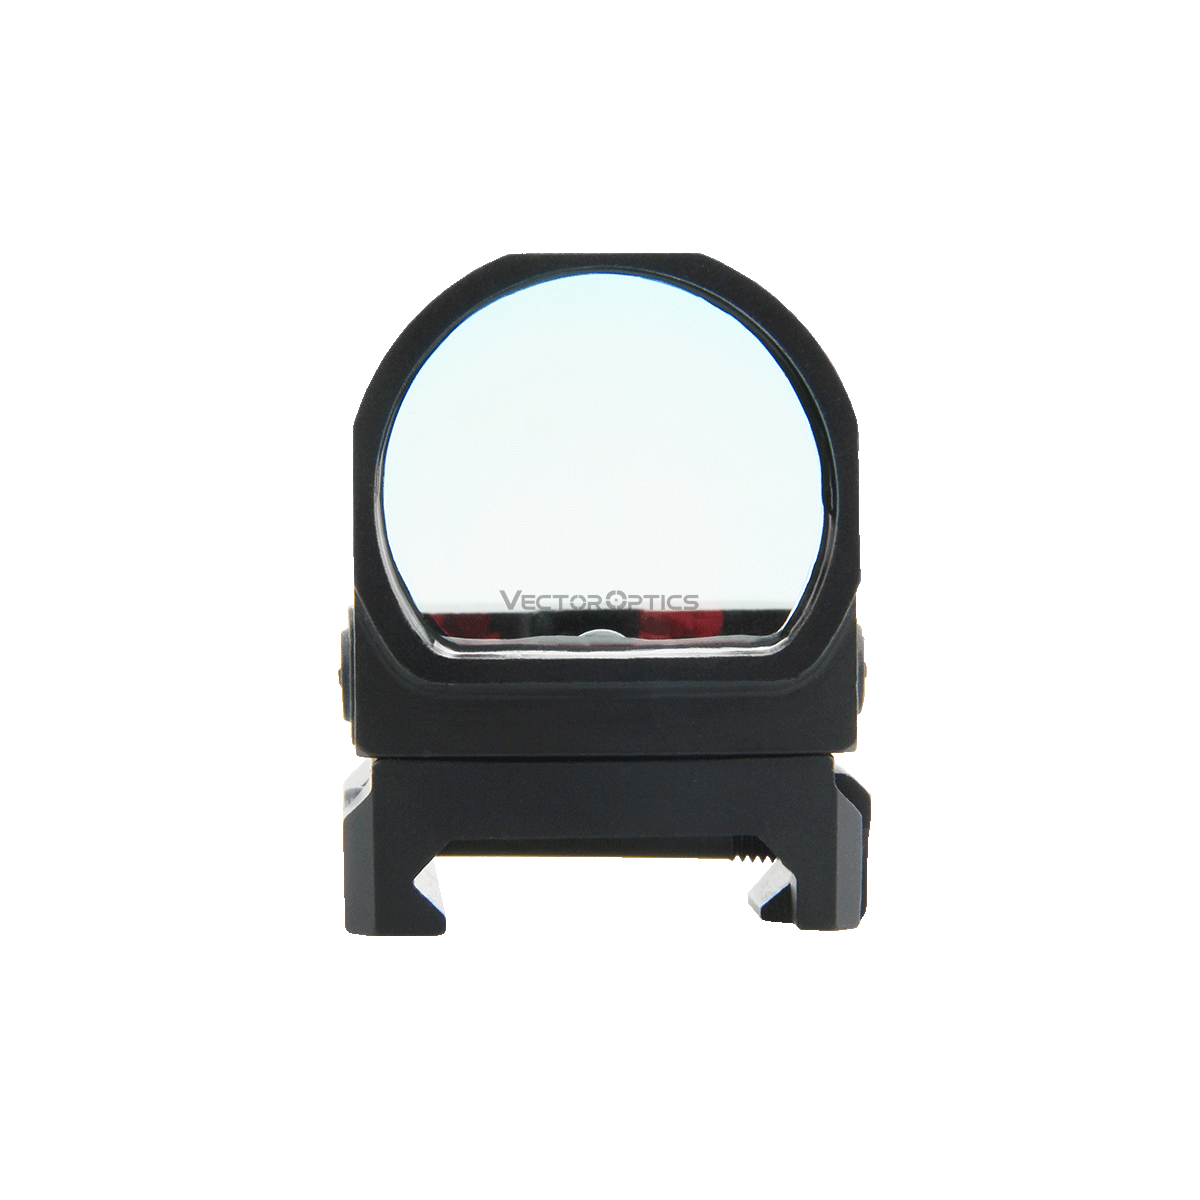 Frenzy 1x22x26 AUT Red Dot Sight Auto Light Sensor